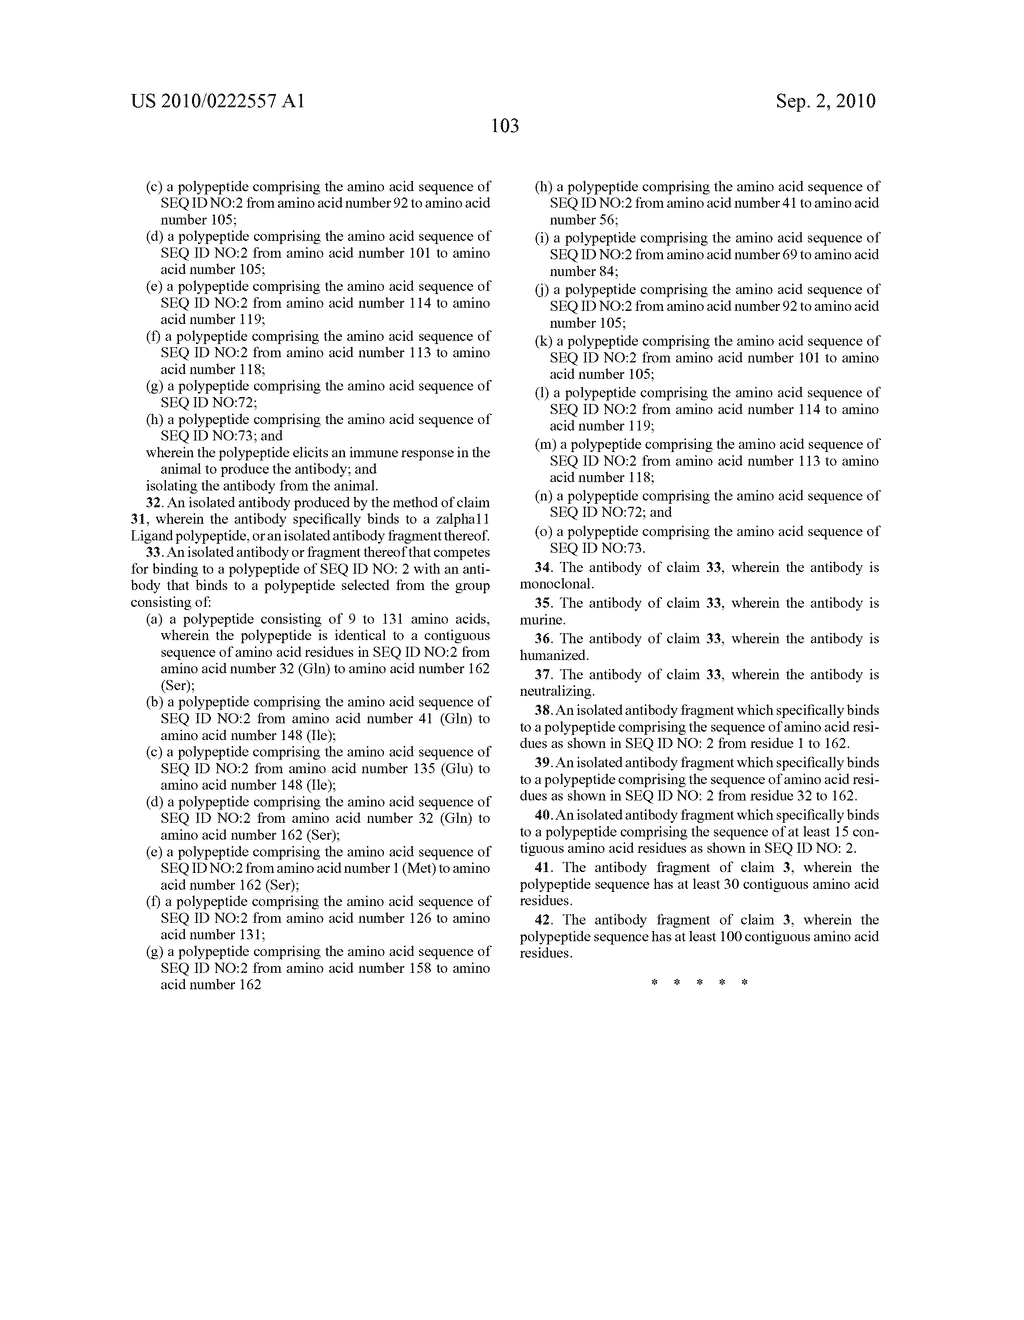 CYTOKINE ZALPHA11LIGAND ANTIBODIES - diagram, schematic, and image 109